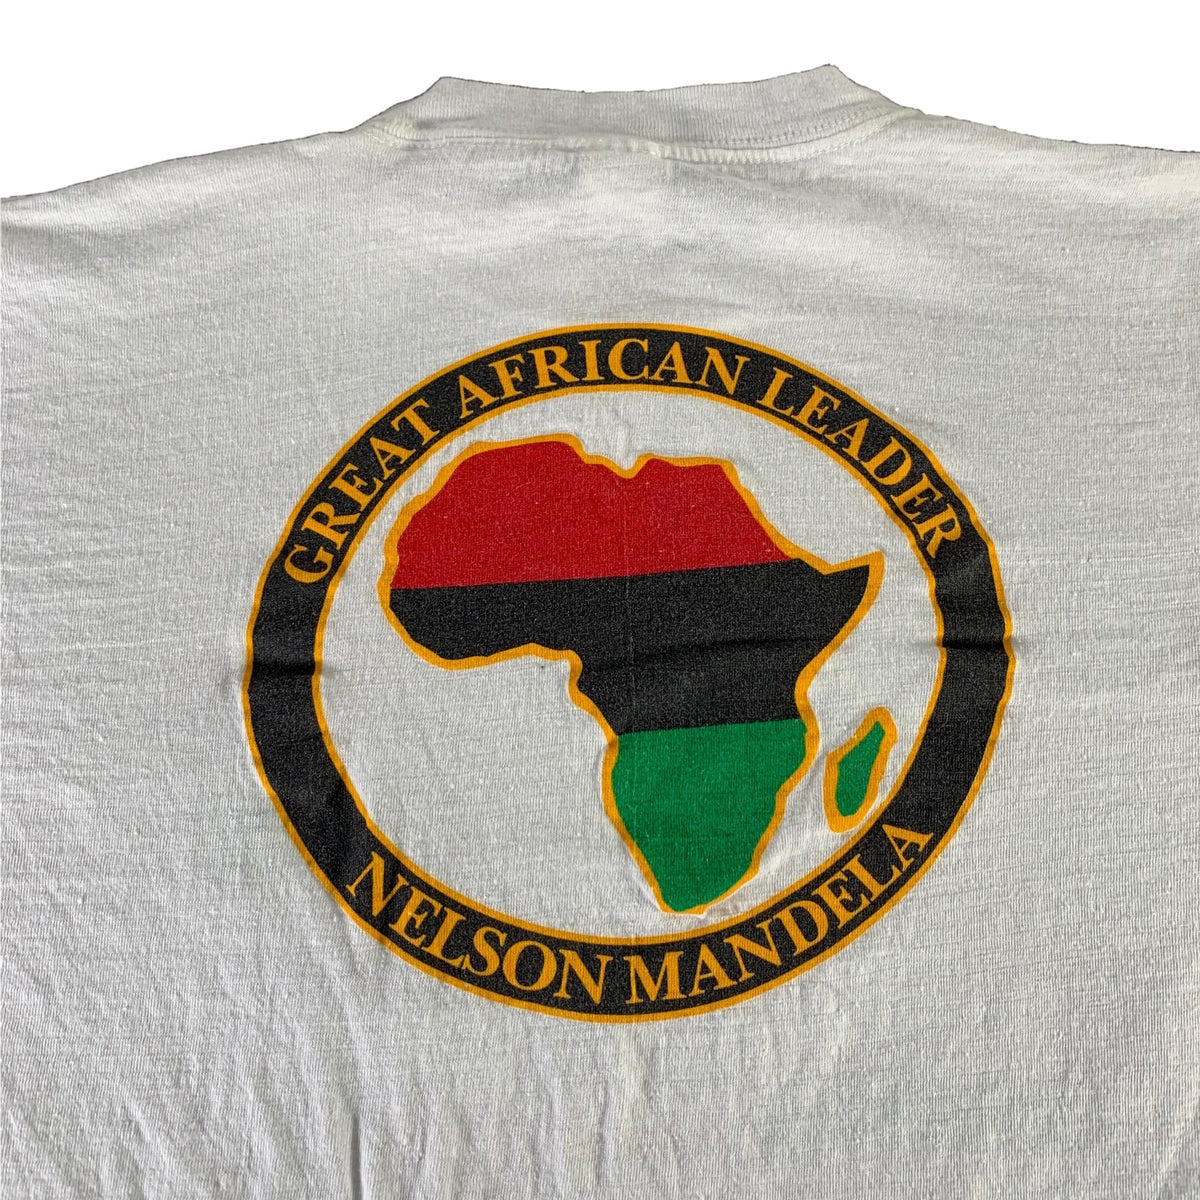 Vintage Nelson Mandela &quot;Black Power&quot; T-Shirt - jointcustodydc